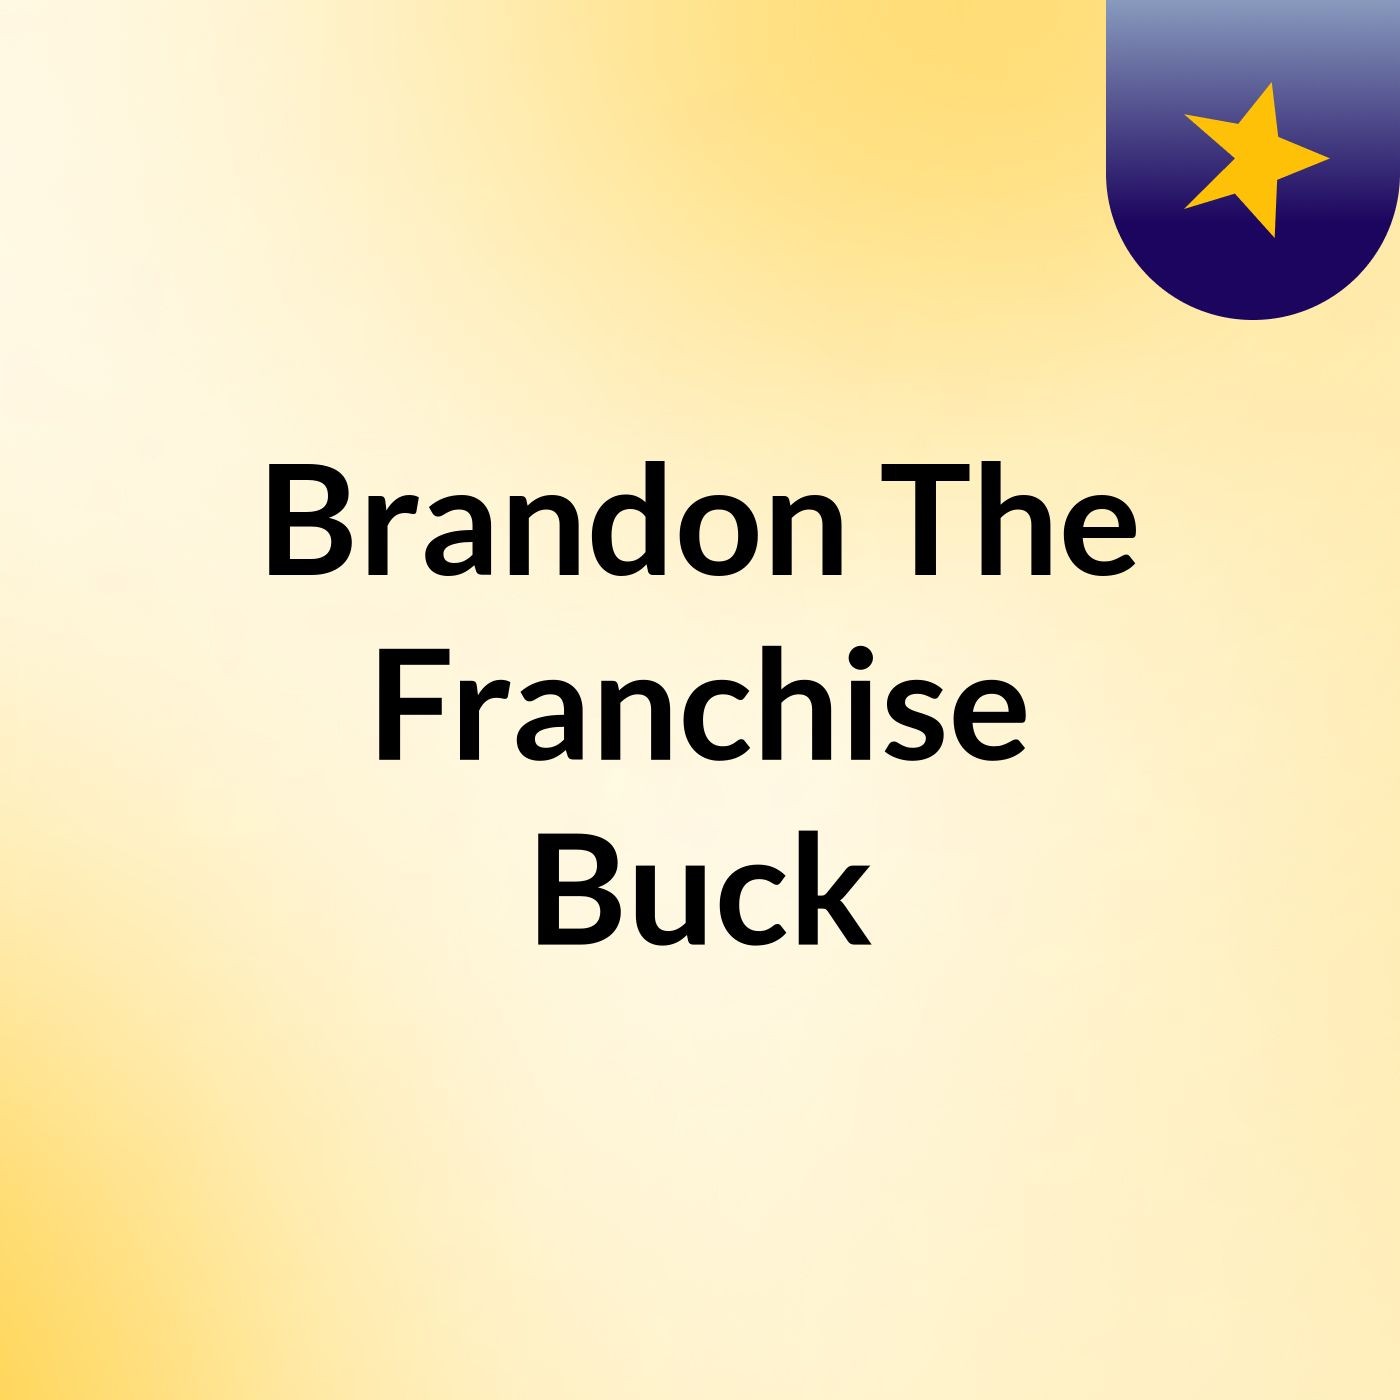 Brandon The Franchise Buck